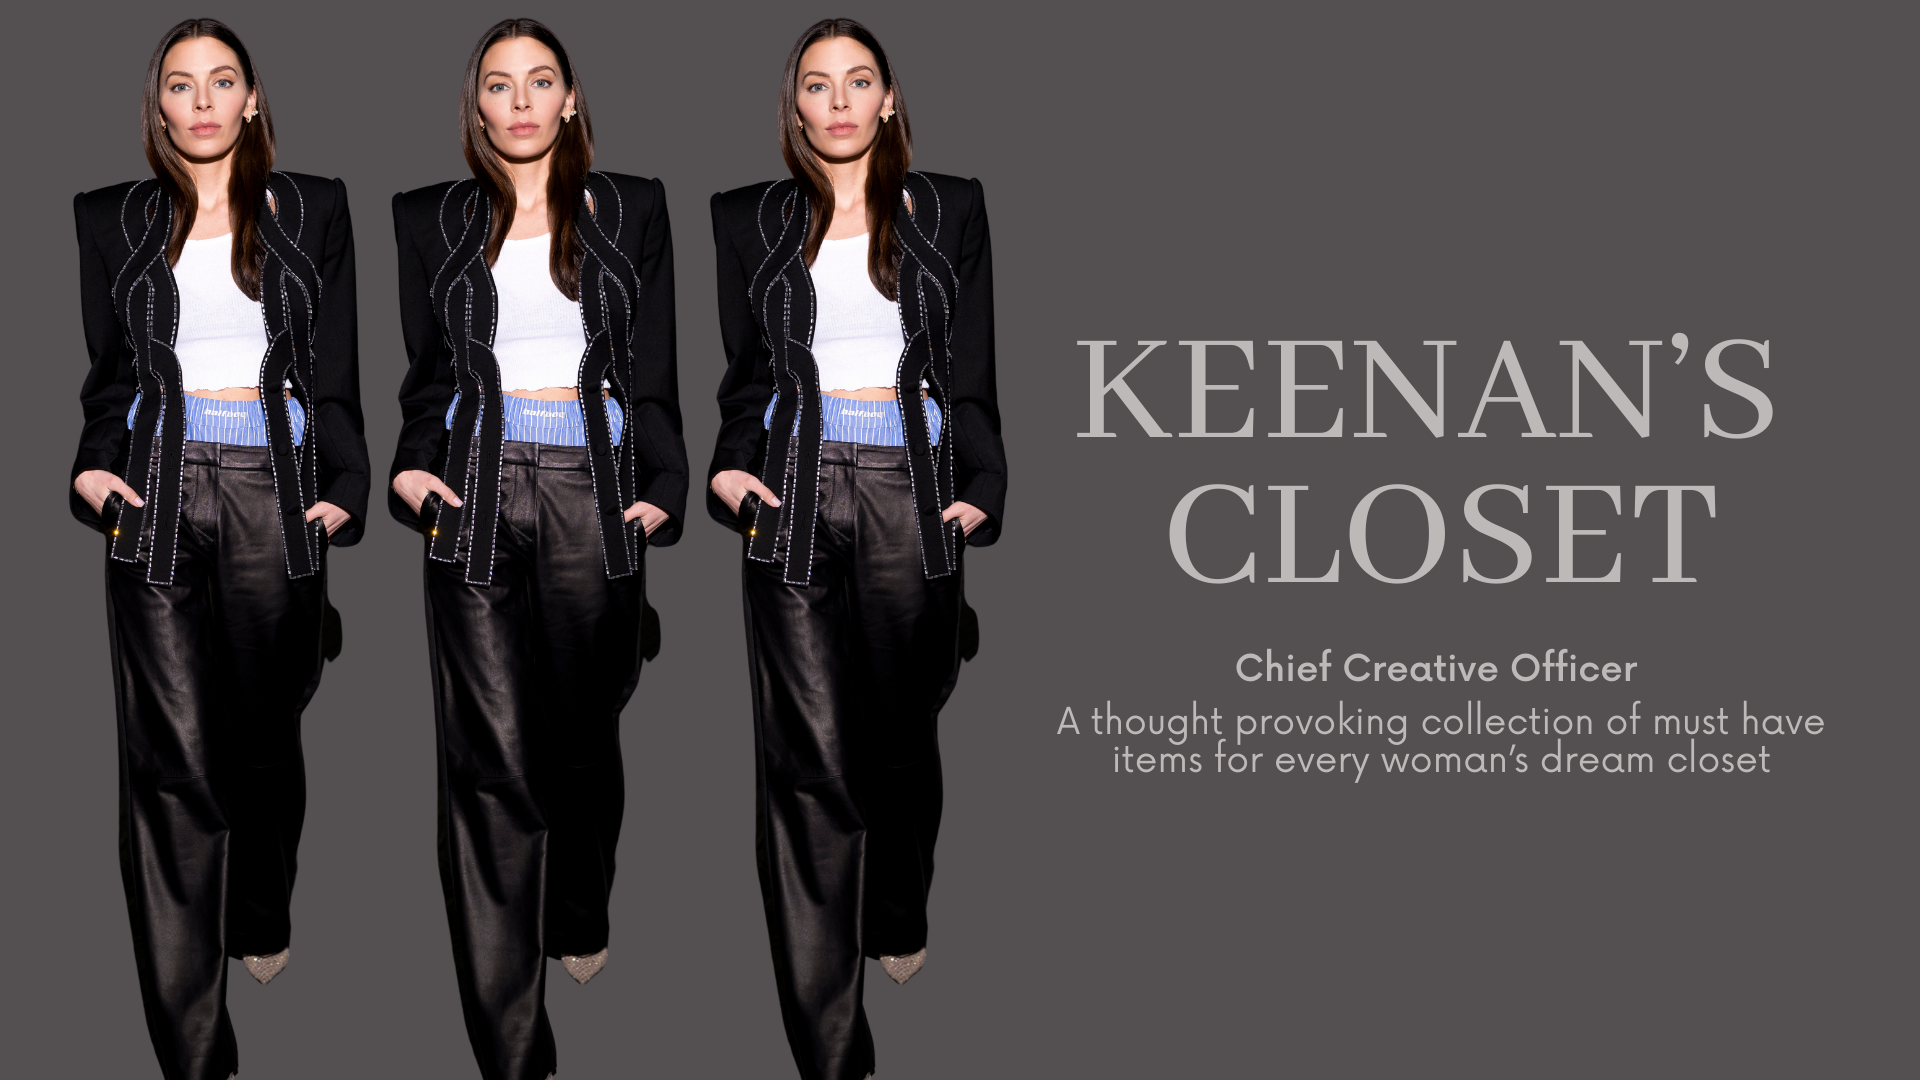 Keenan copied three times wearing a blazer and black pants.  